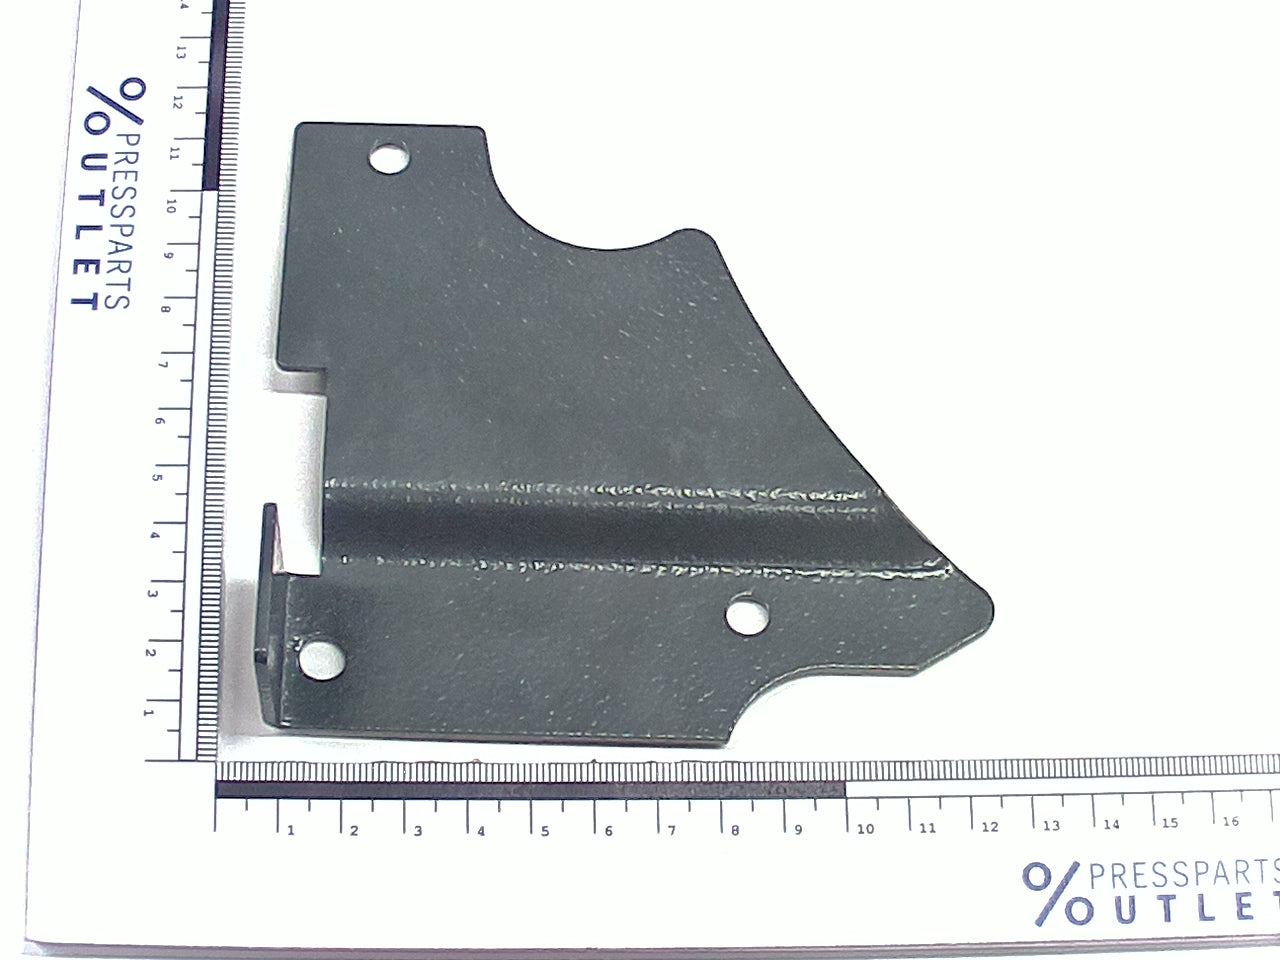 Cover plate DS InpressControlAP XLr8 - F4.805.144 /02 - Abdeckblech AS InpressControlAP XLr8